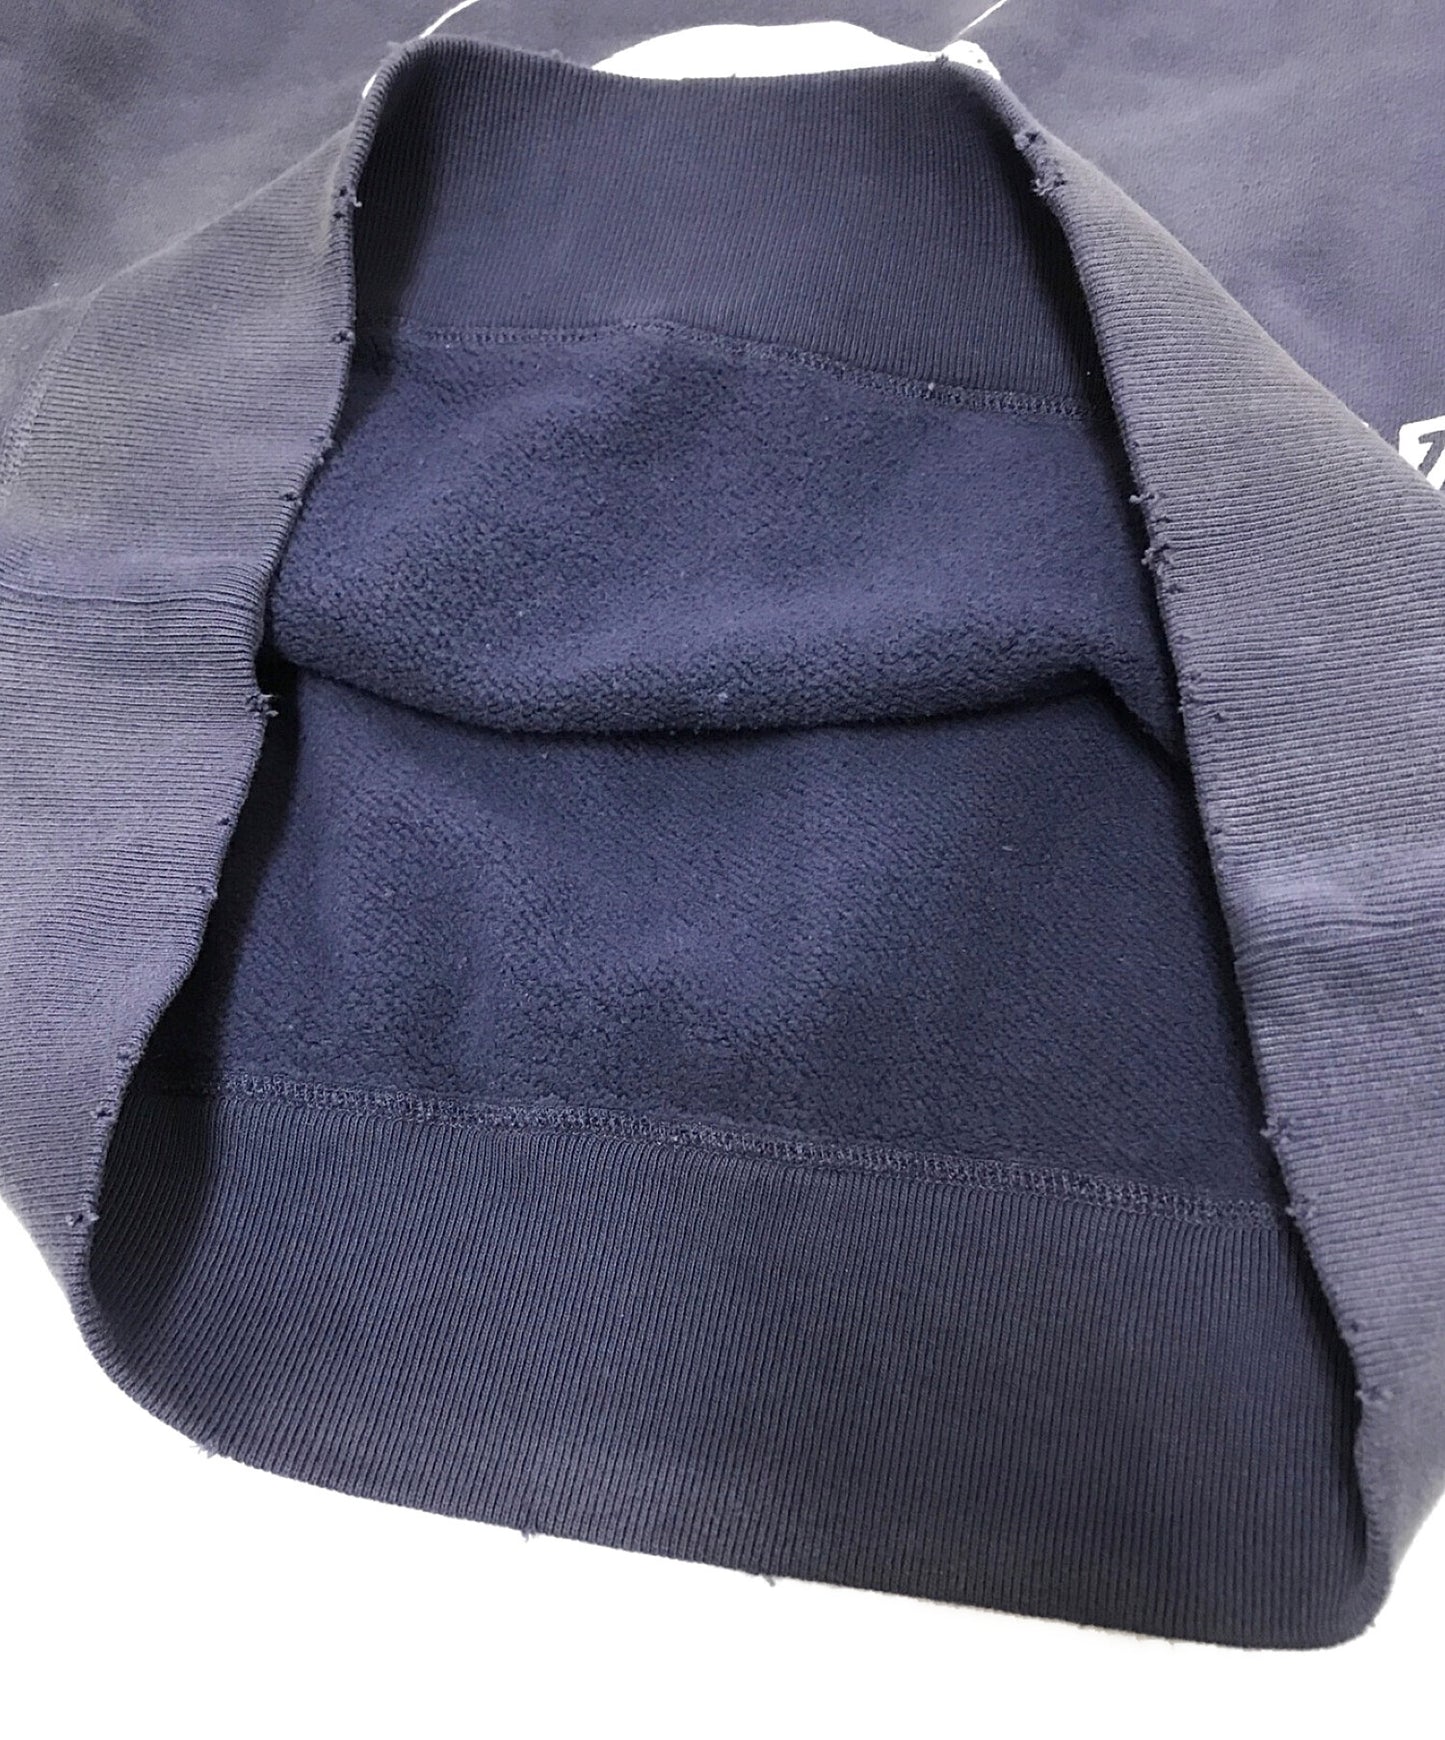 [Pre-owned] SAINT MICHAEL SKULL USED CREW NECK SWEAT Used, Damaged, Boro College Sweatshirt SM-A21-0000-027